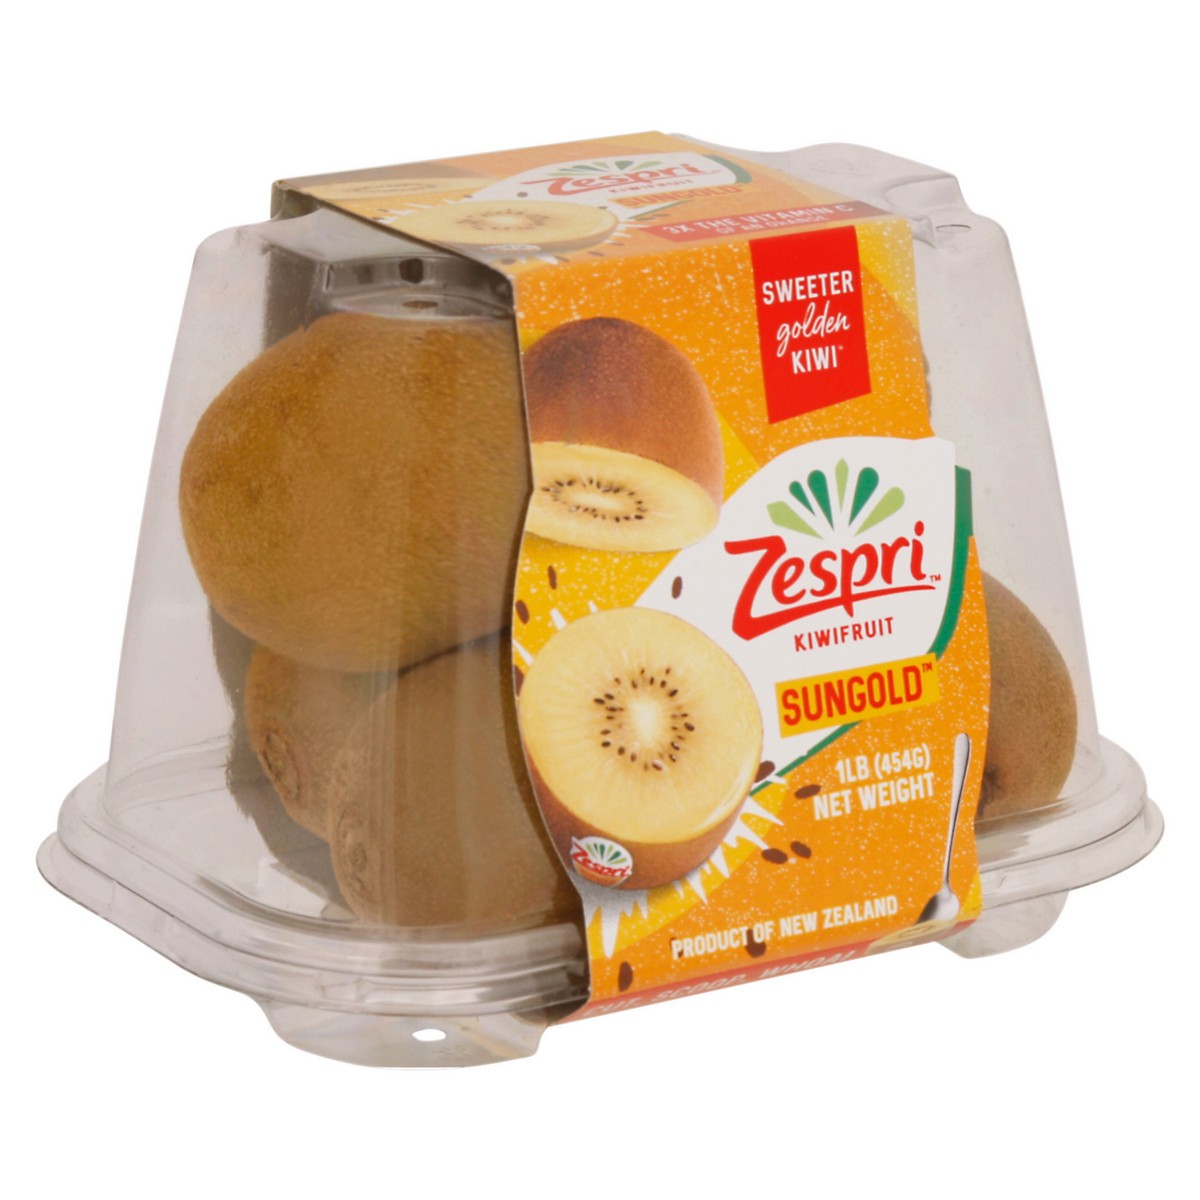 slide 6 of 13, Zespri Sungold Kiwifruit 1 lb, 1 lb